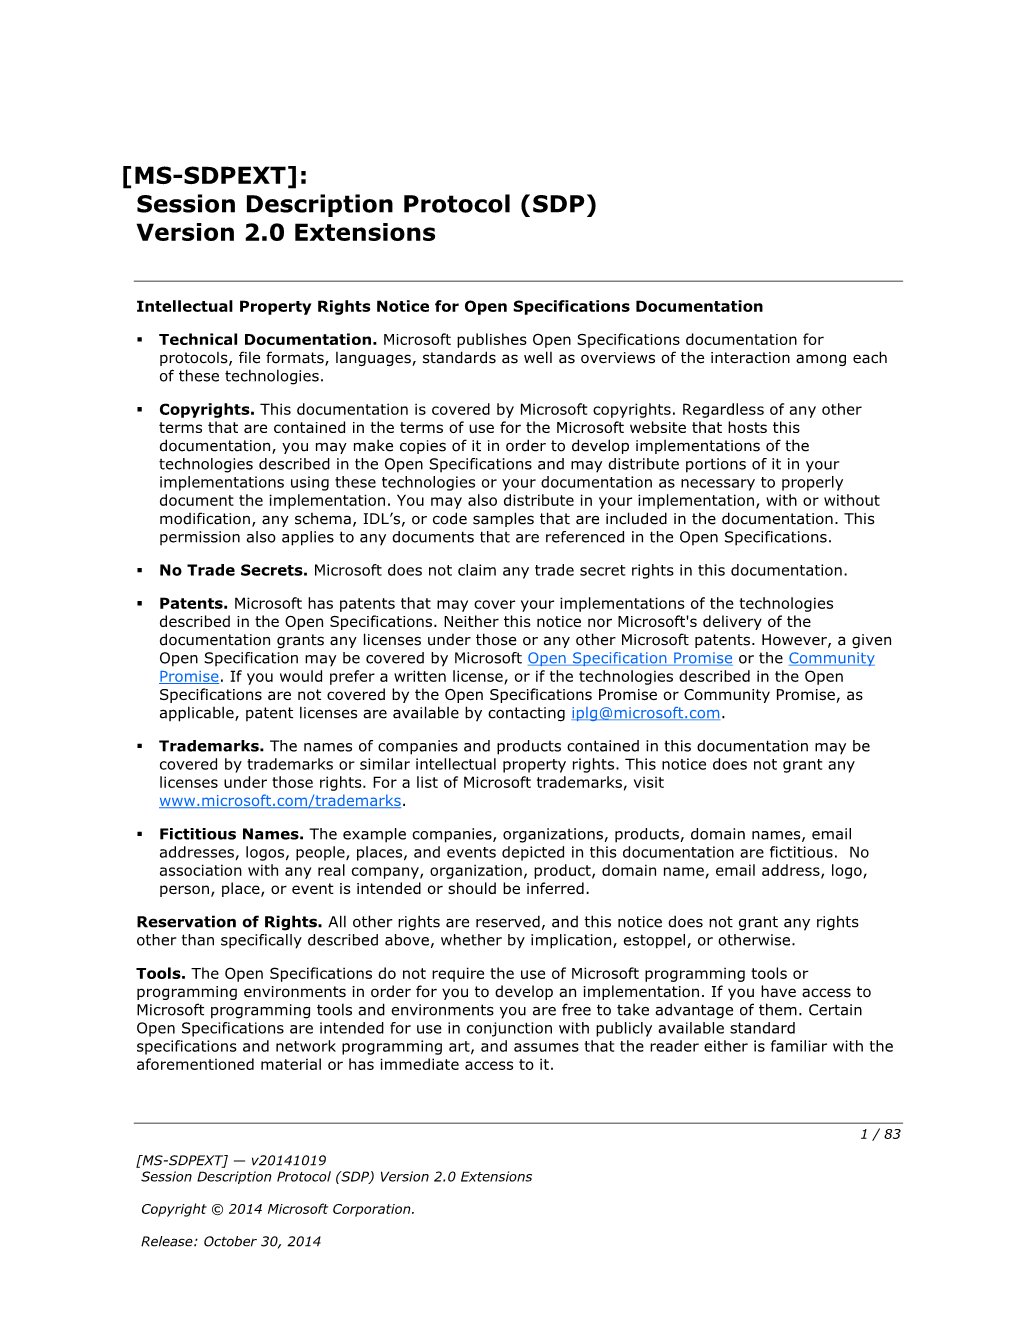 MS-SDPEXT]: Session Description Protocol (SDP) Version 2.0 Extensions